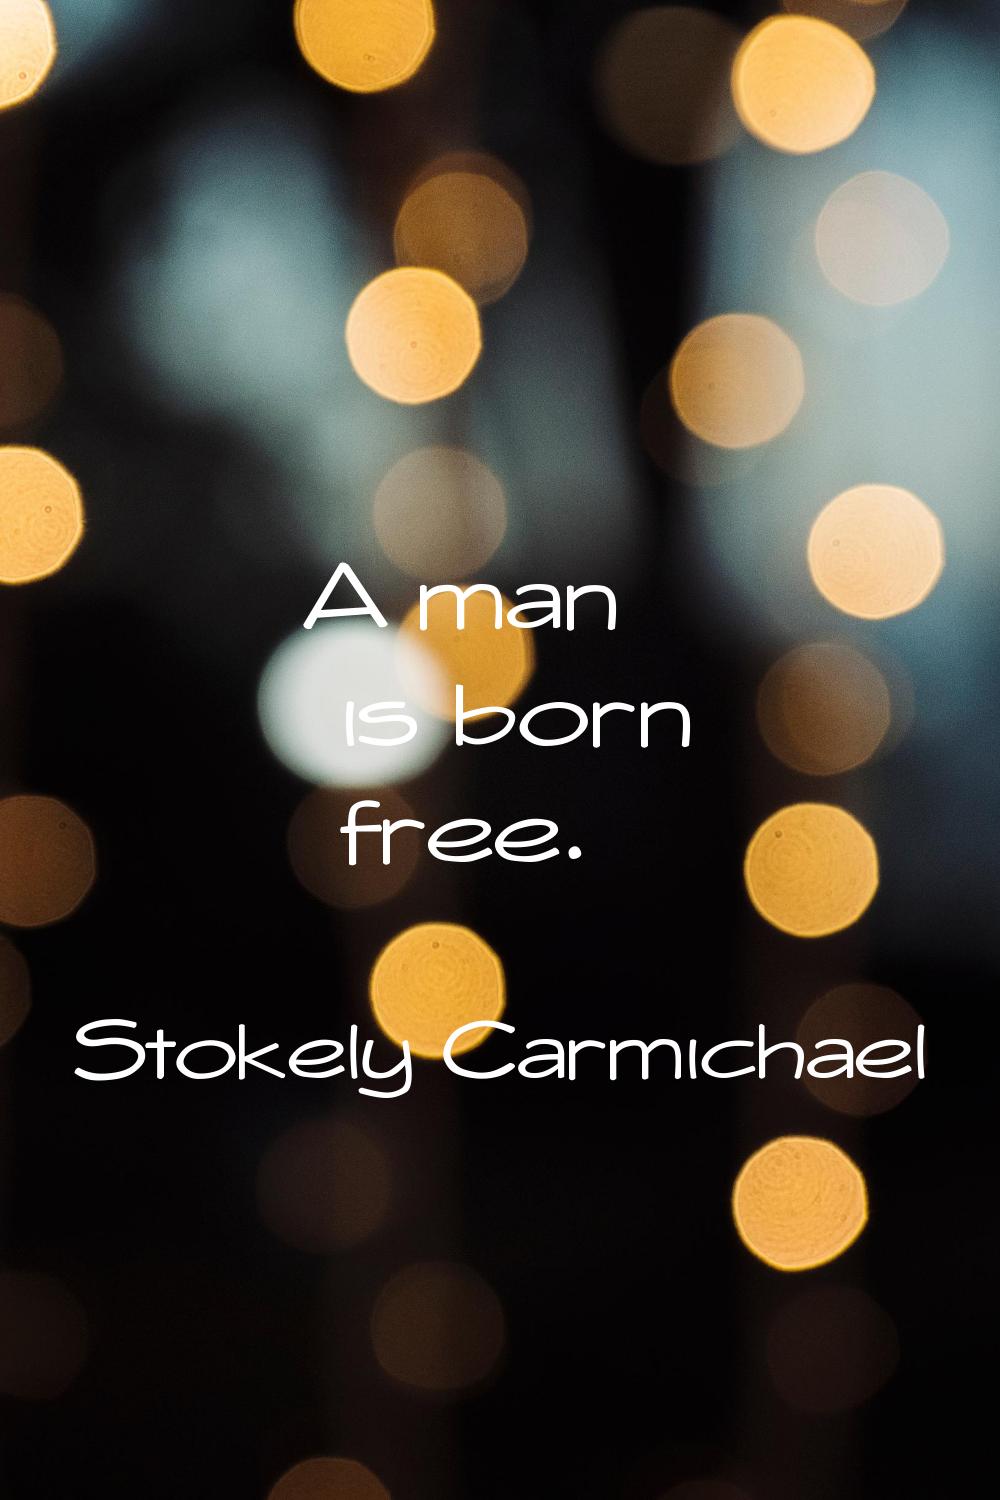 A man is born free.